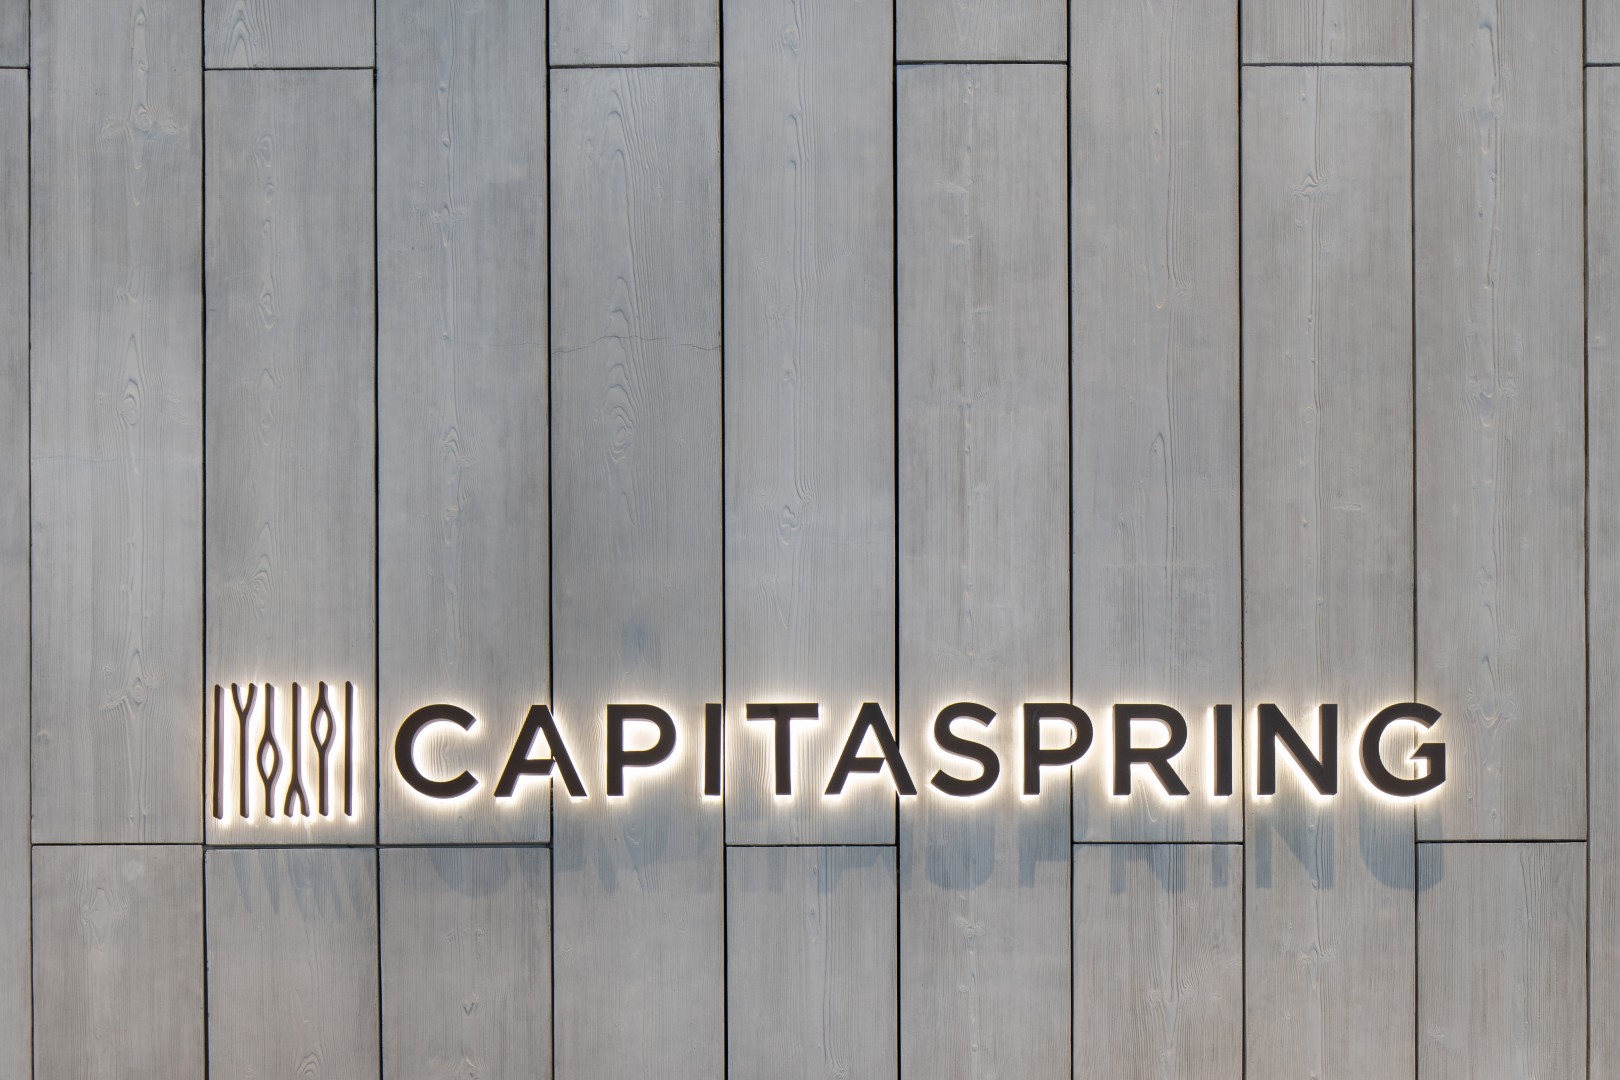 CapitaSpring logo on side of building